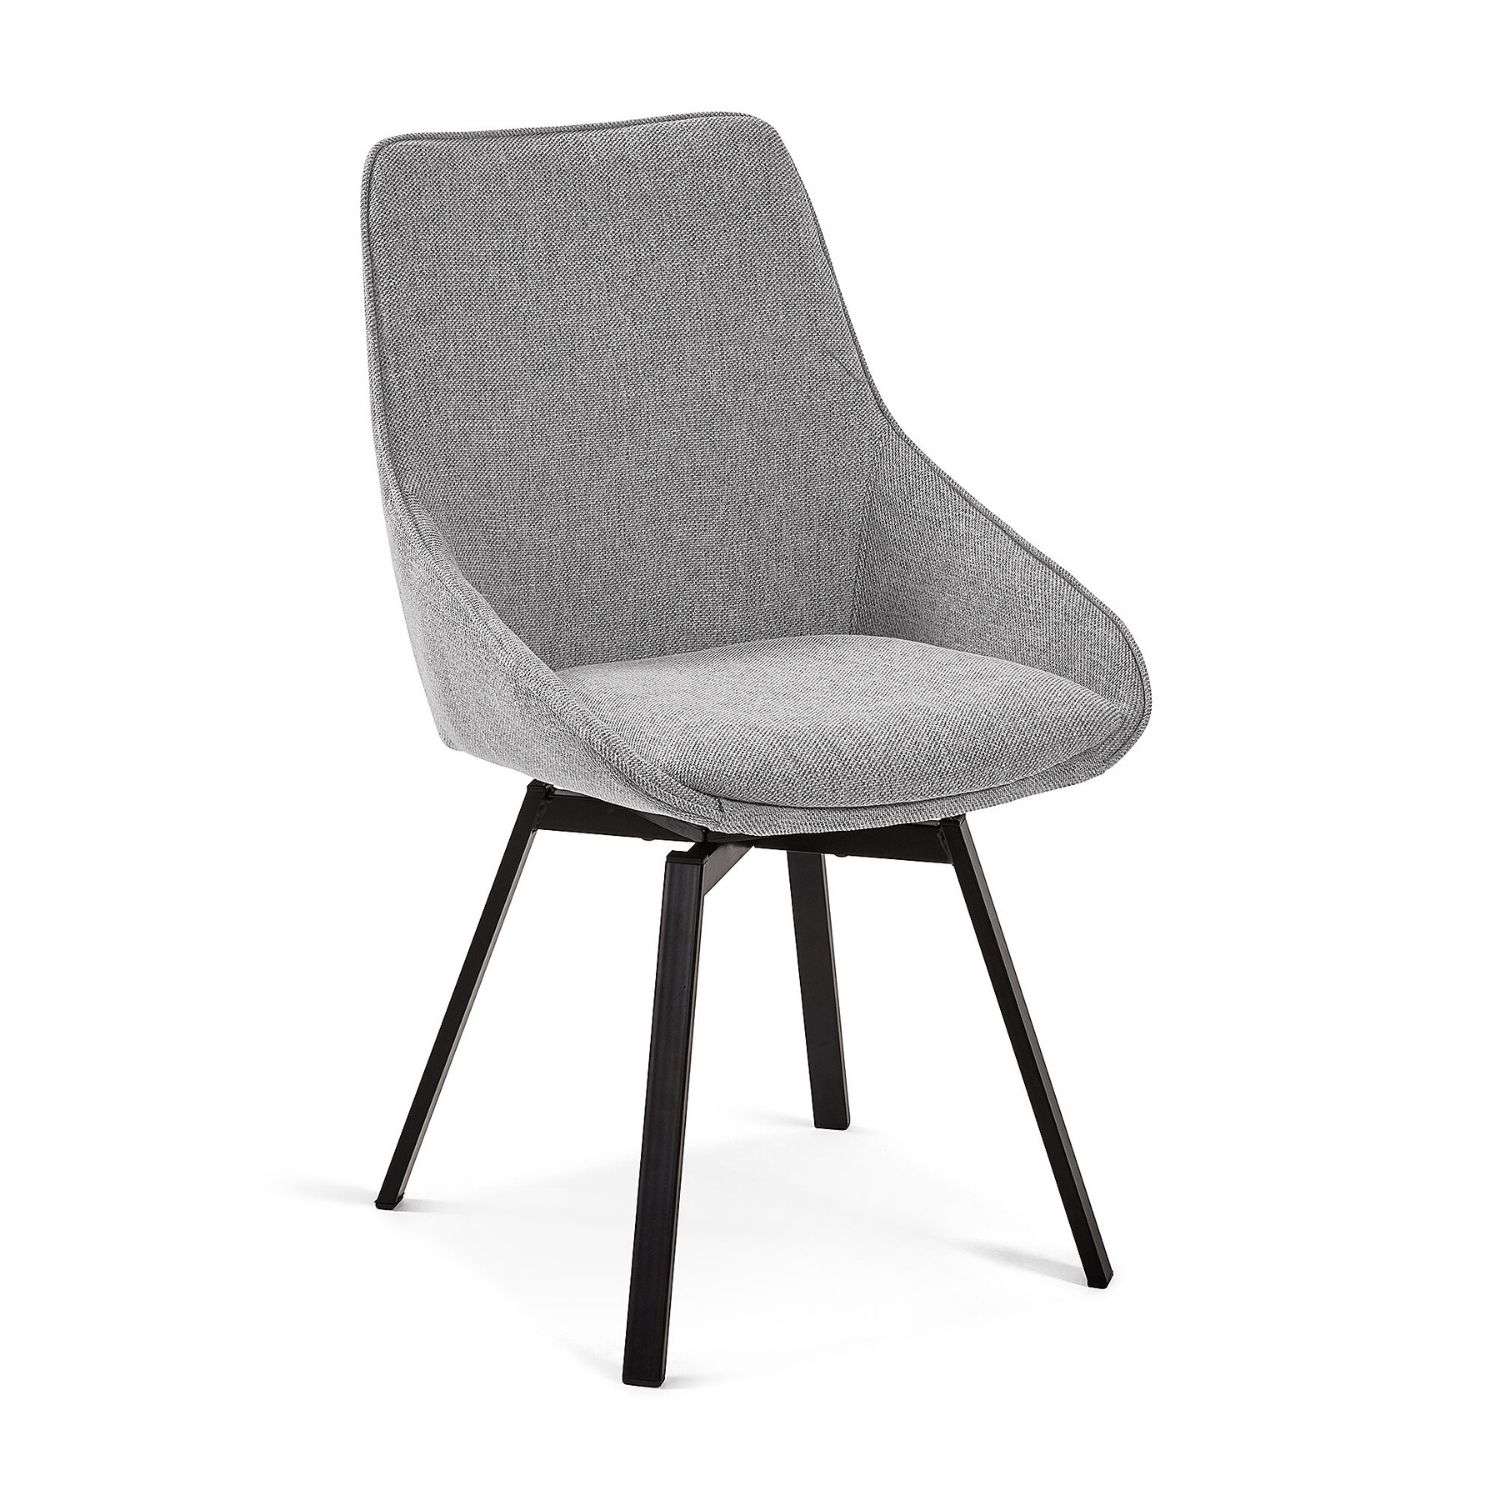 LAFORMA Haston spisebordsstol m. armlæn - grå stof og metal med krydsfiner